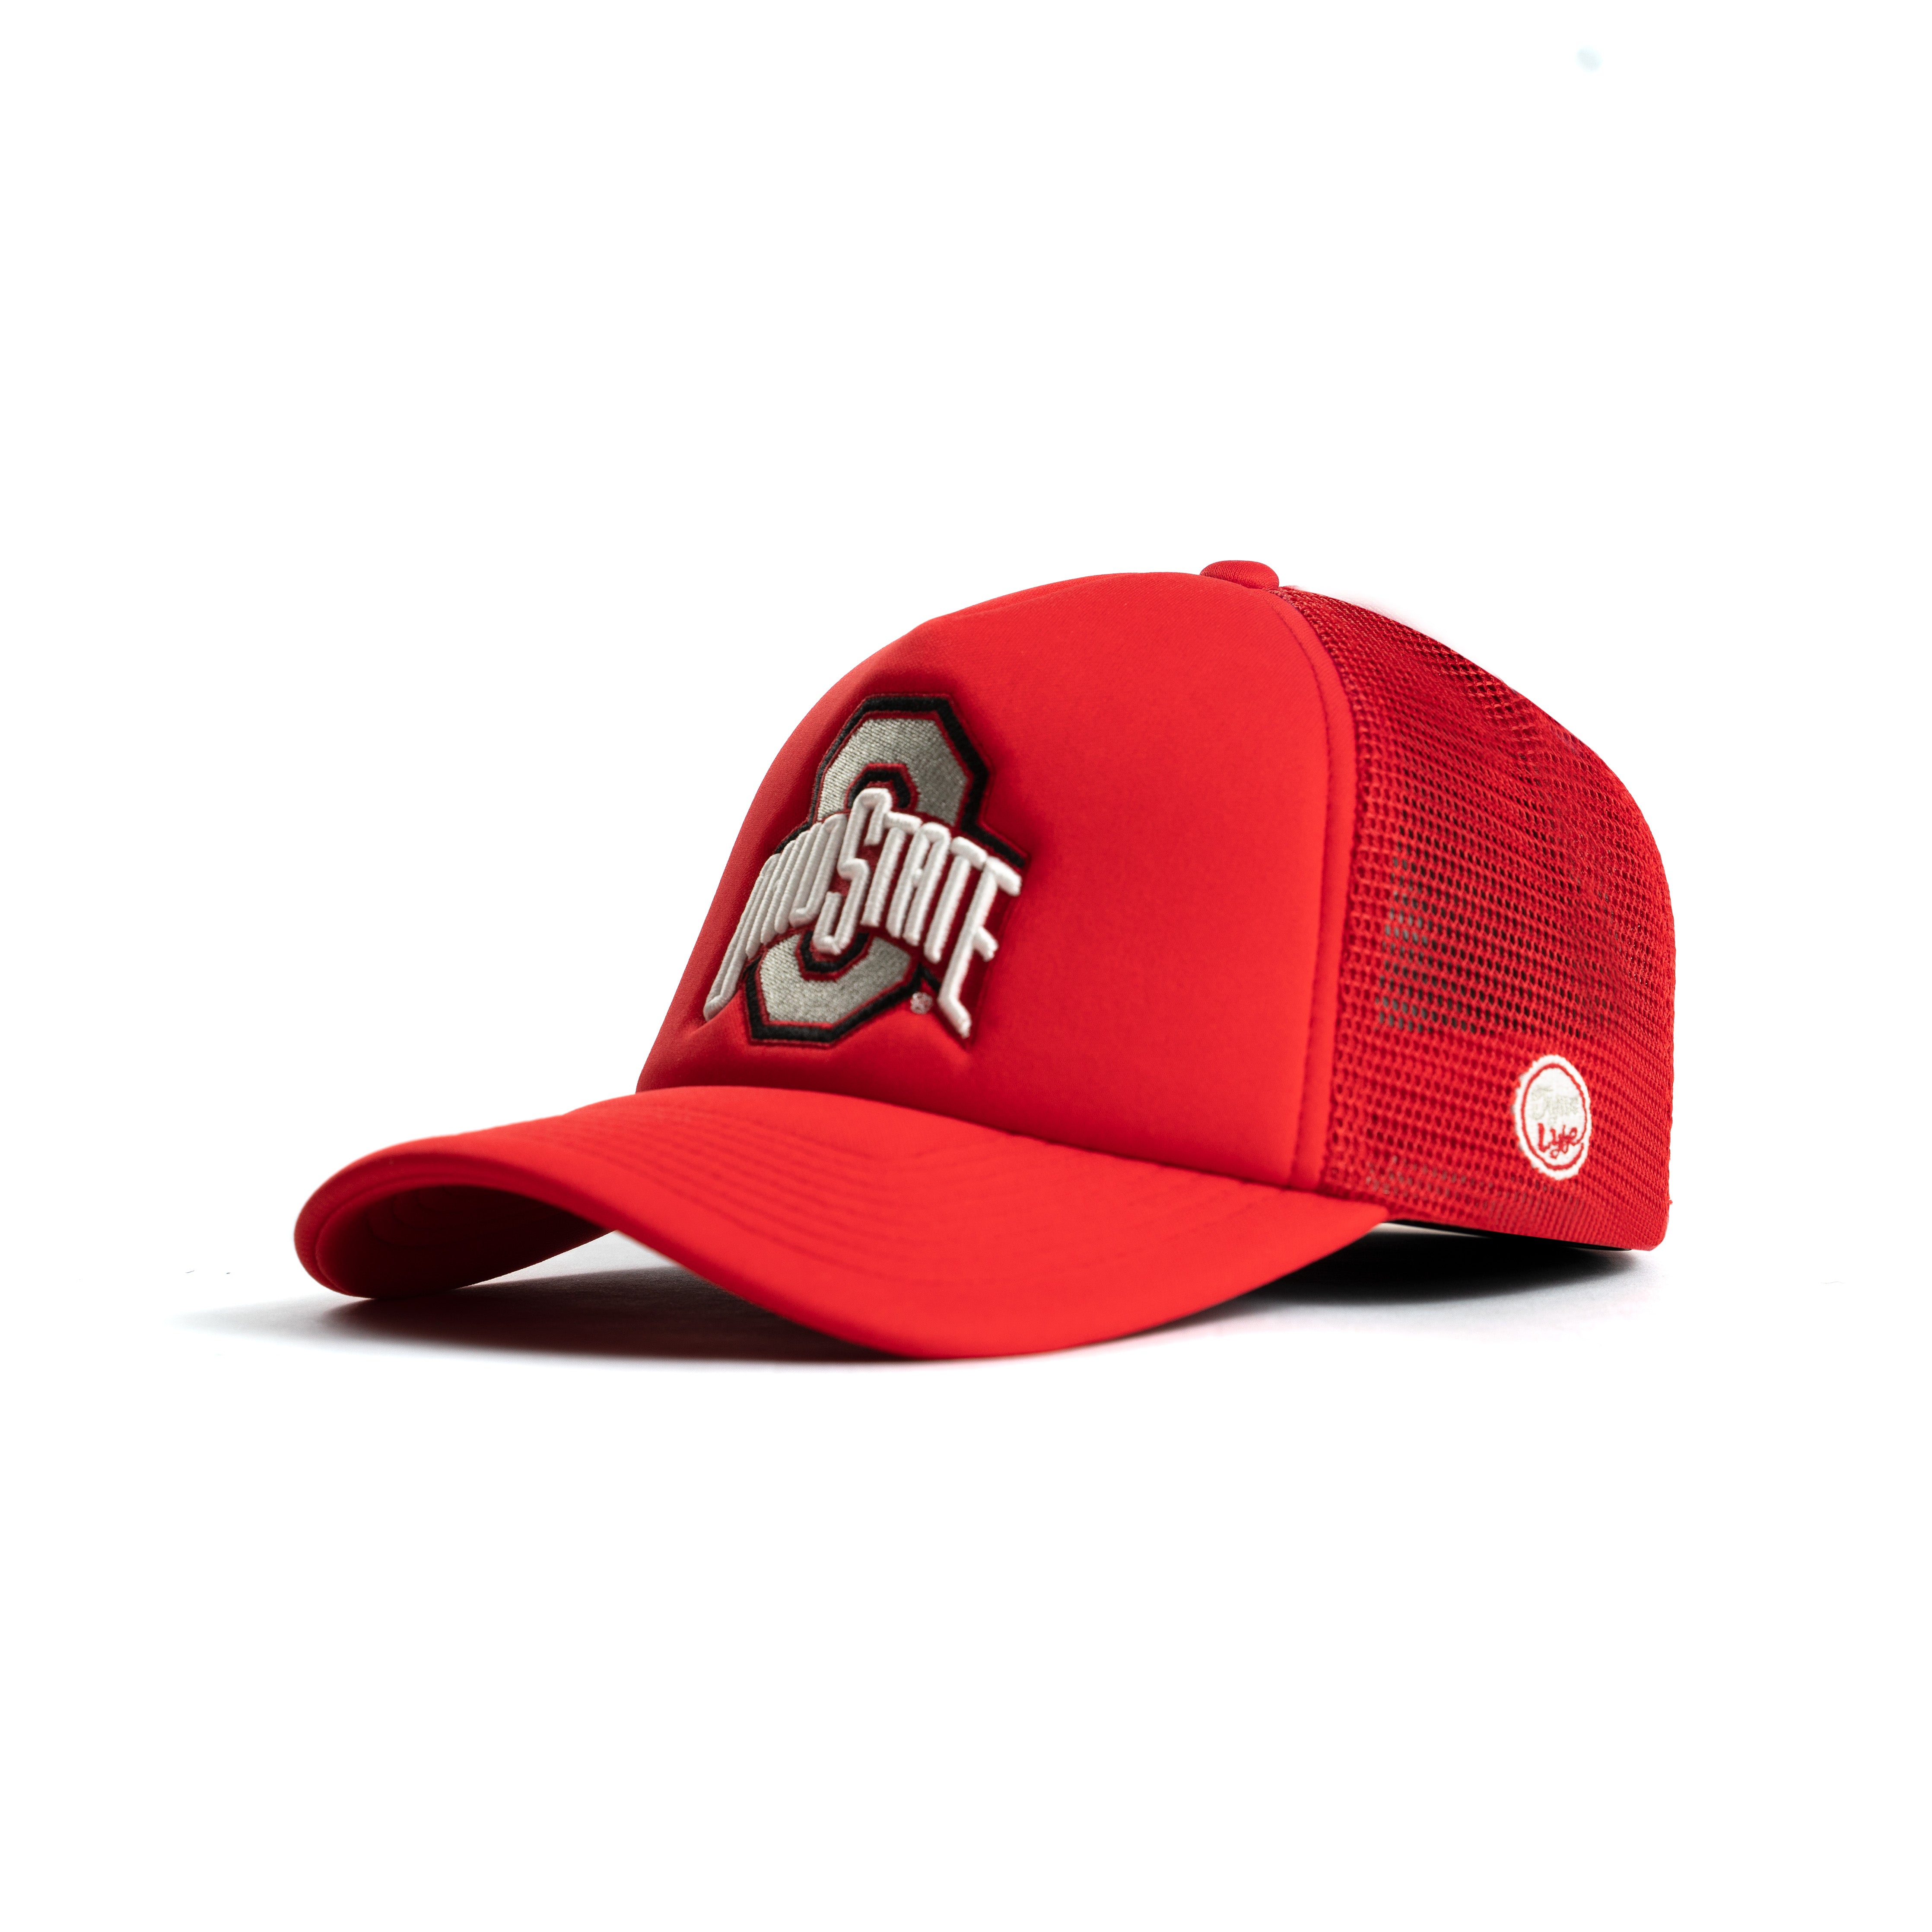 Ohio State Buckeyes Trucker Hat